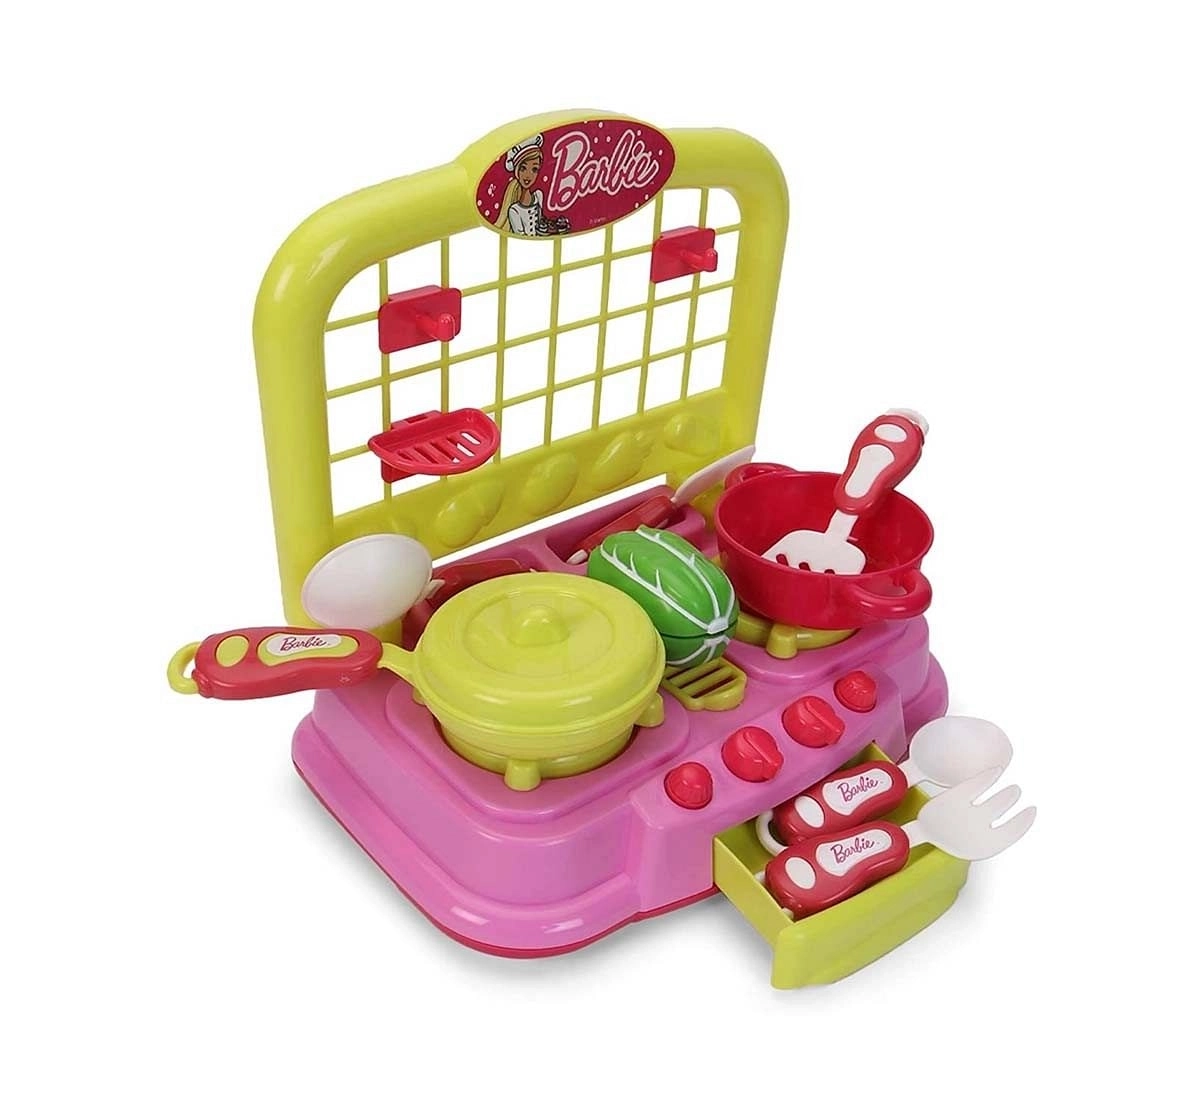 Barbie Kitchen Set Kitchen Sets & Appliances for Kids Age 3Y+